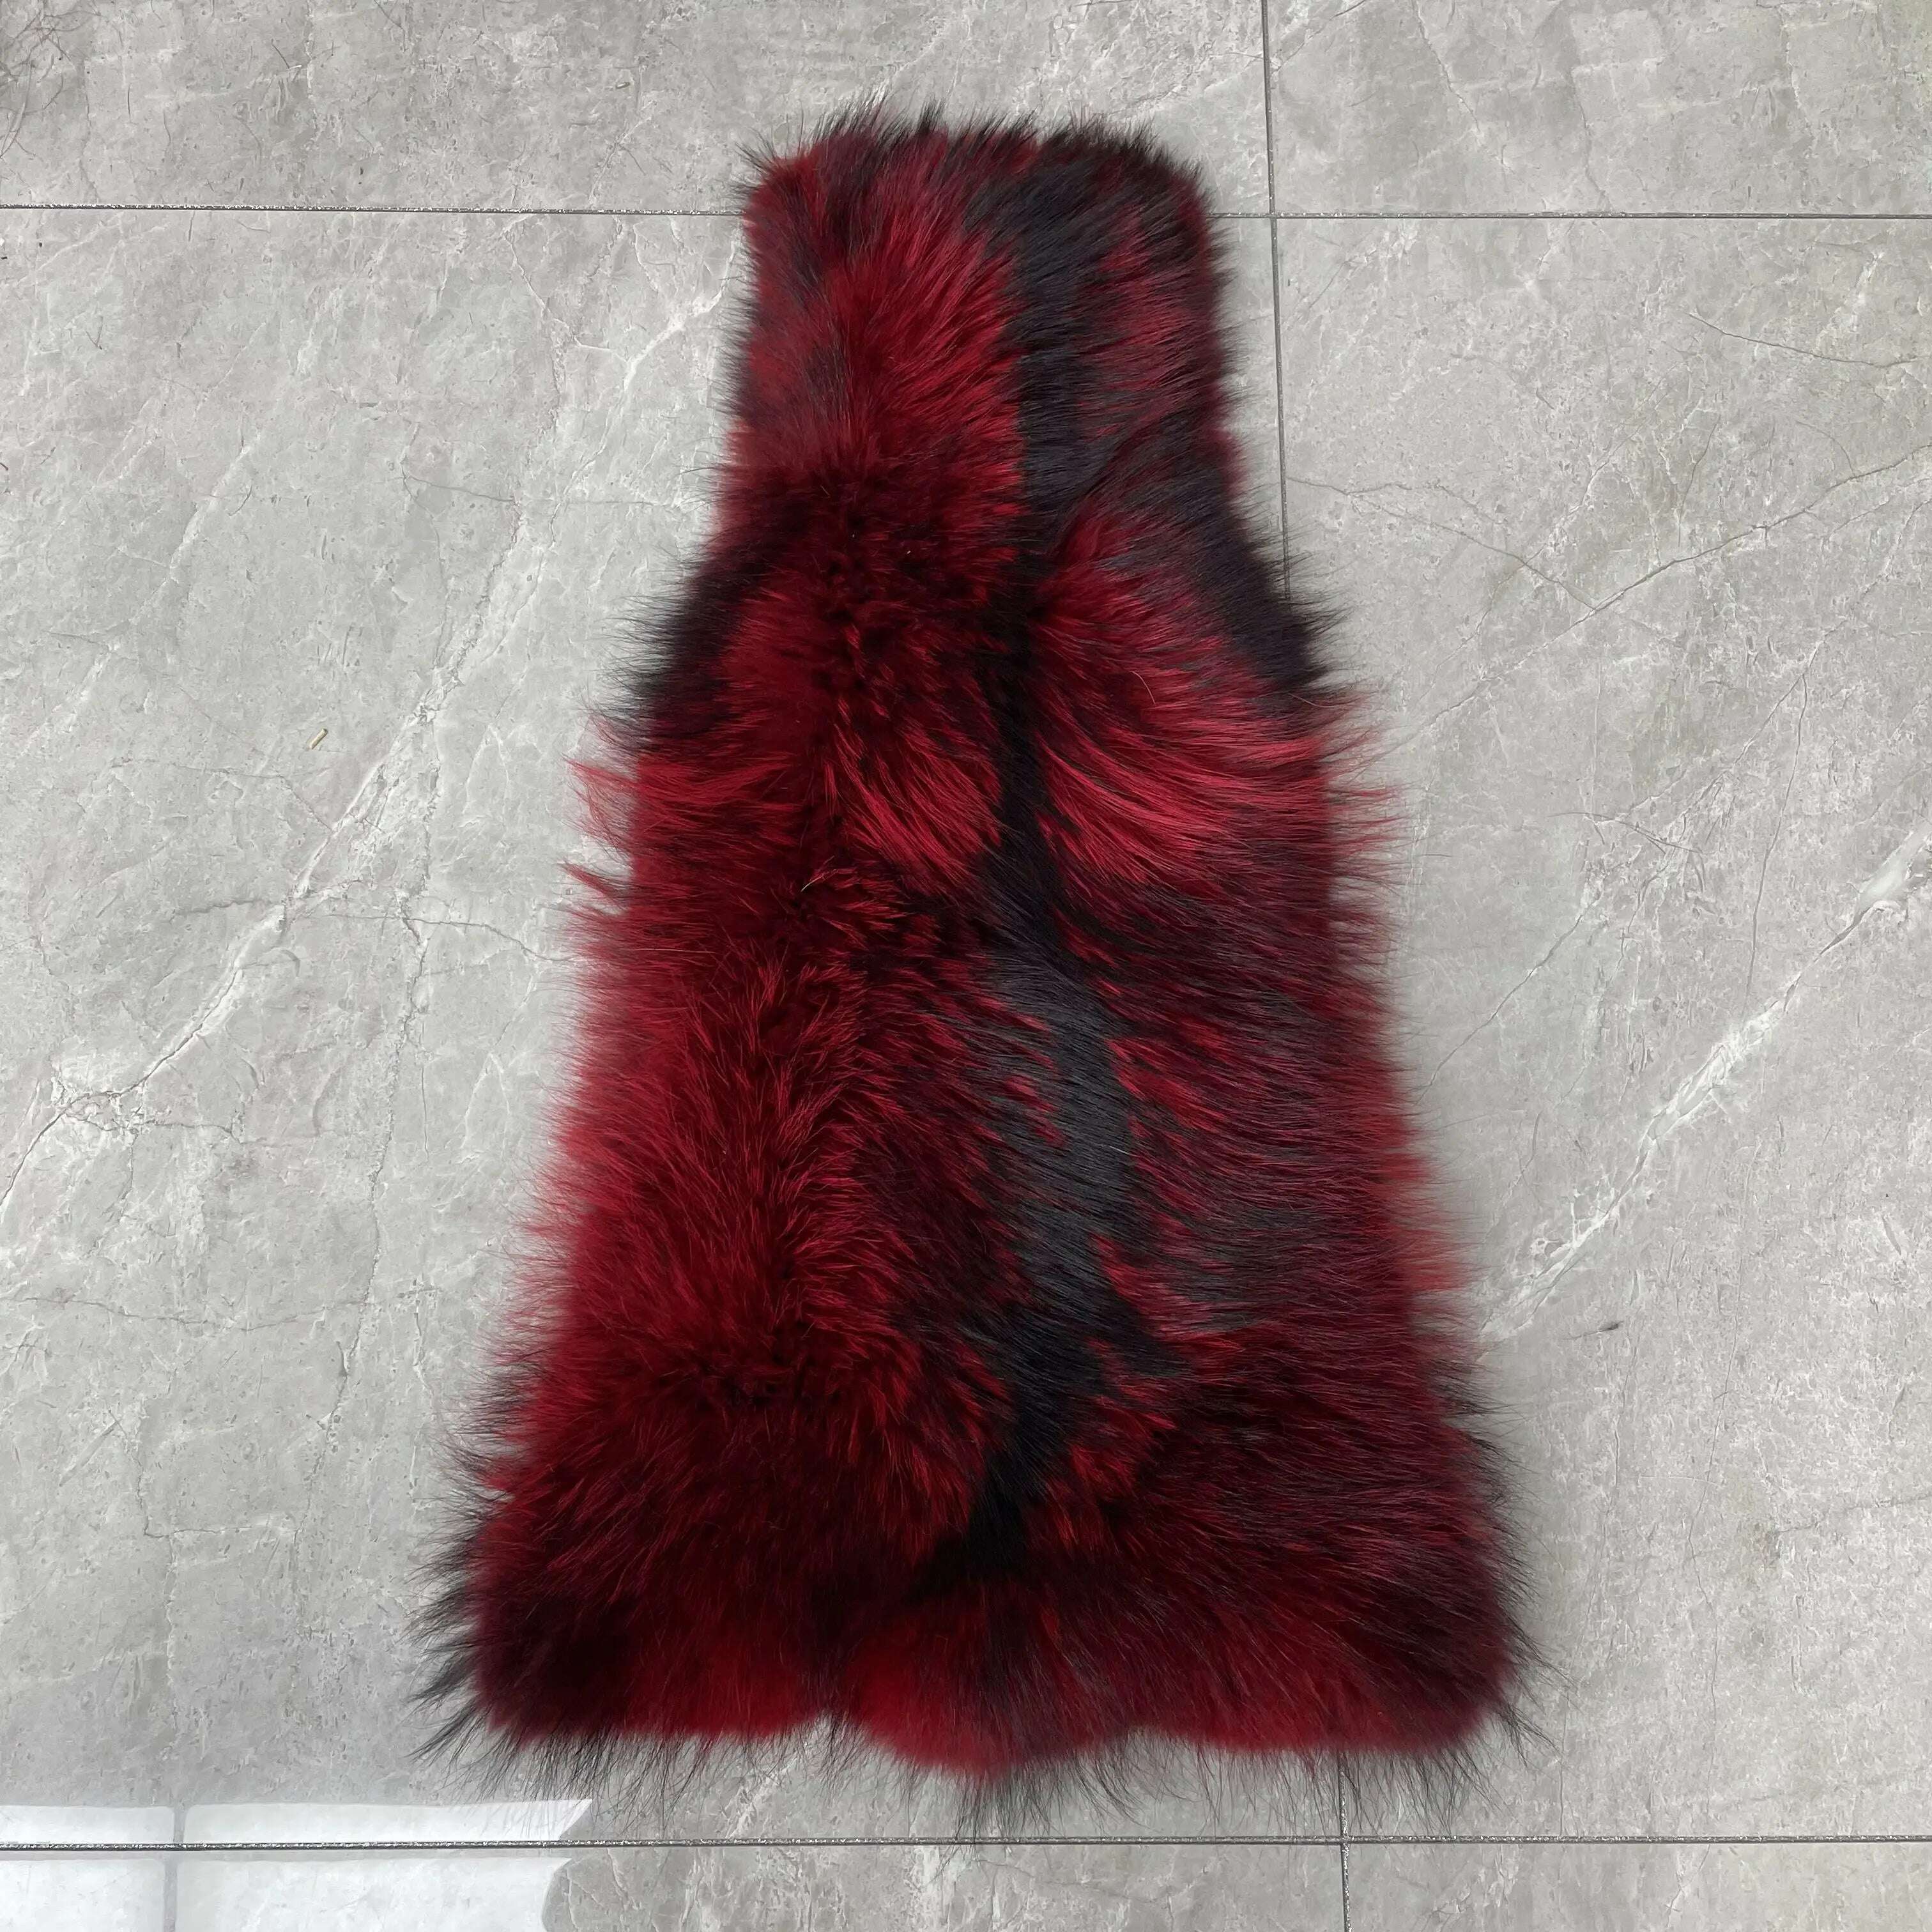 KIMLUD, Wholeskin Men Golden Fox Fur Long Coats Shawl Collar Winter Overcoats Genuine Natural Fox Furs Jacket, RED / XS(88cm), KIMLUD Women's Clothes